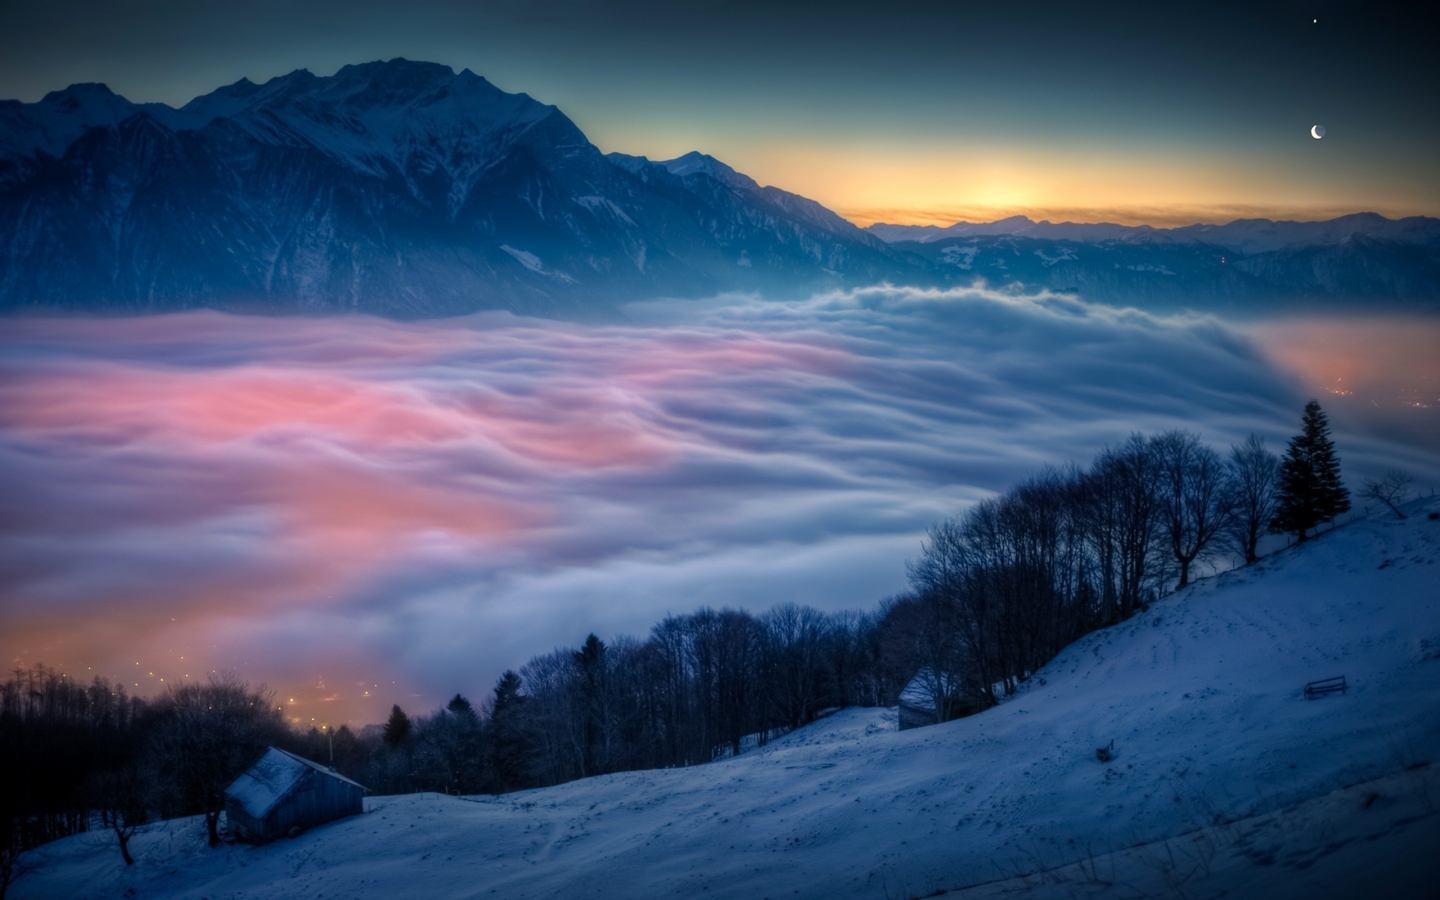 Mountain Fog for 1440 x 900 widescreen resolution